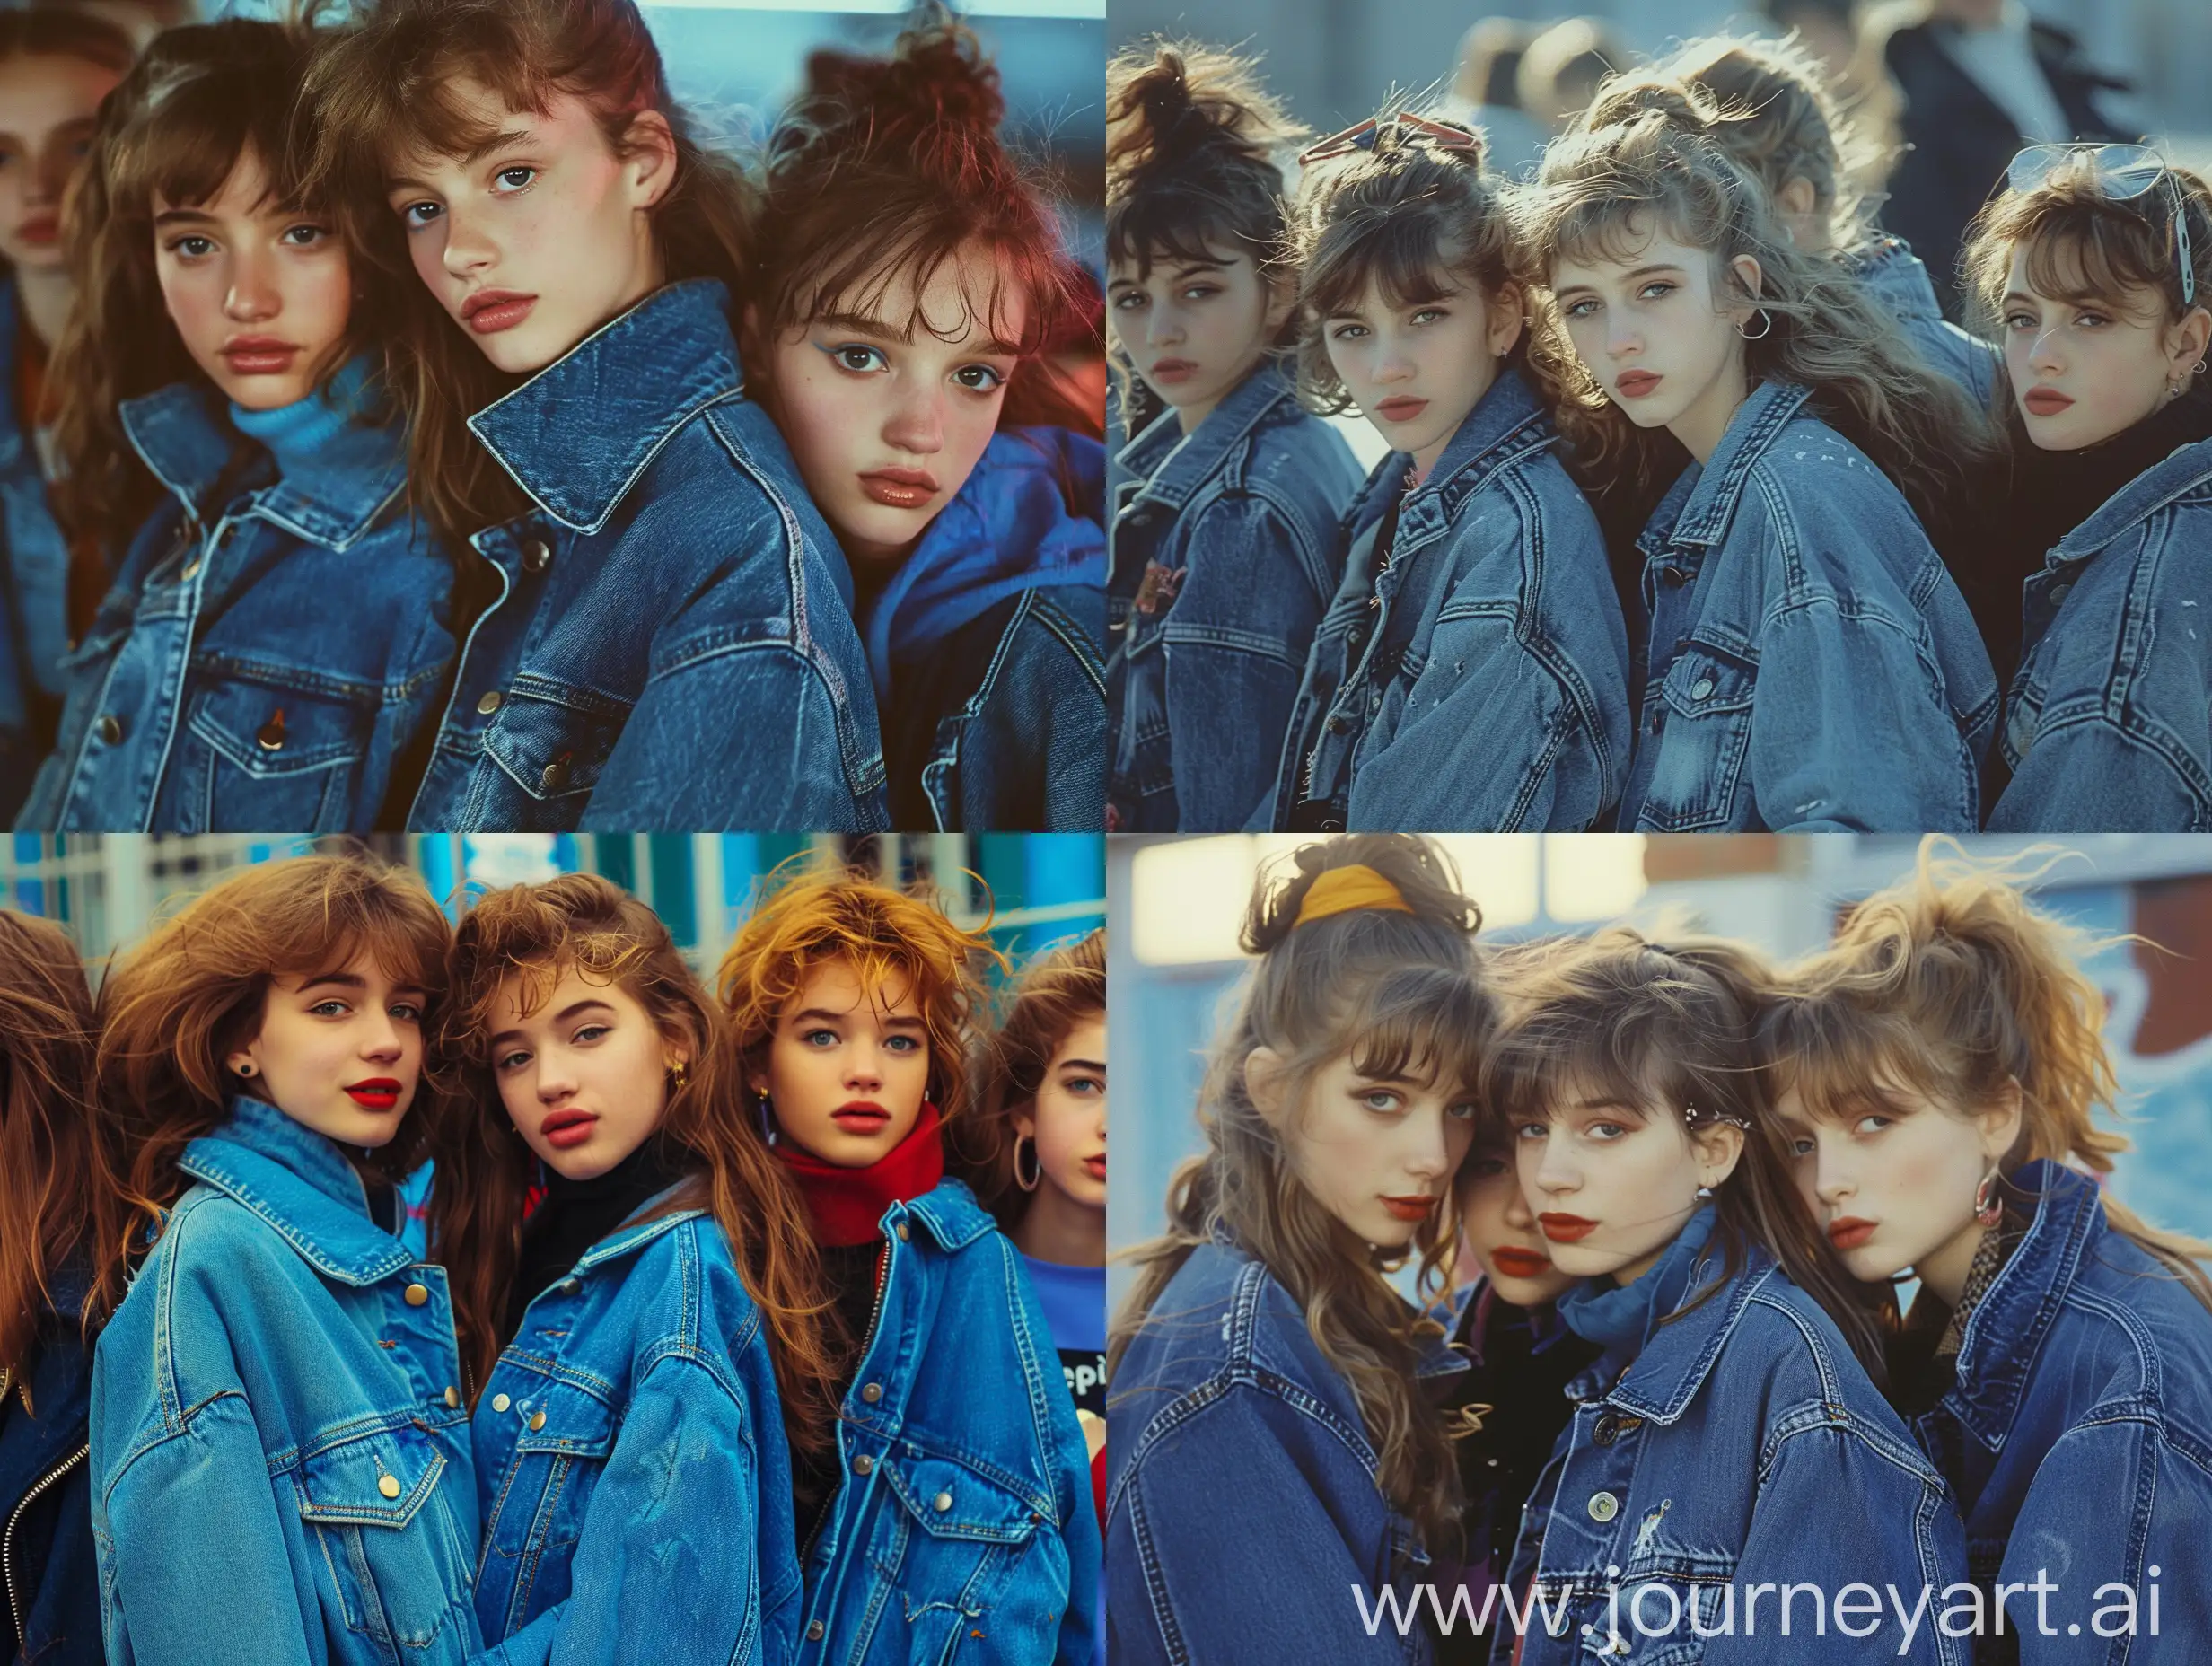 Stylish-1980s-Aesthetic-Girls-in-Trendy-Denim-Jackets